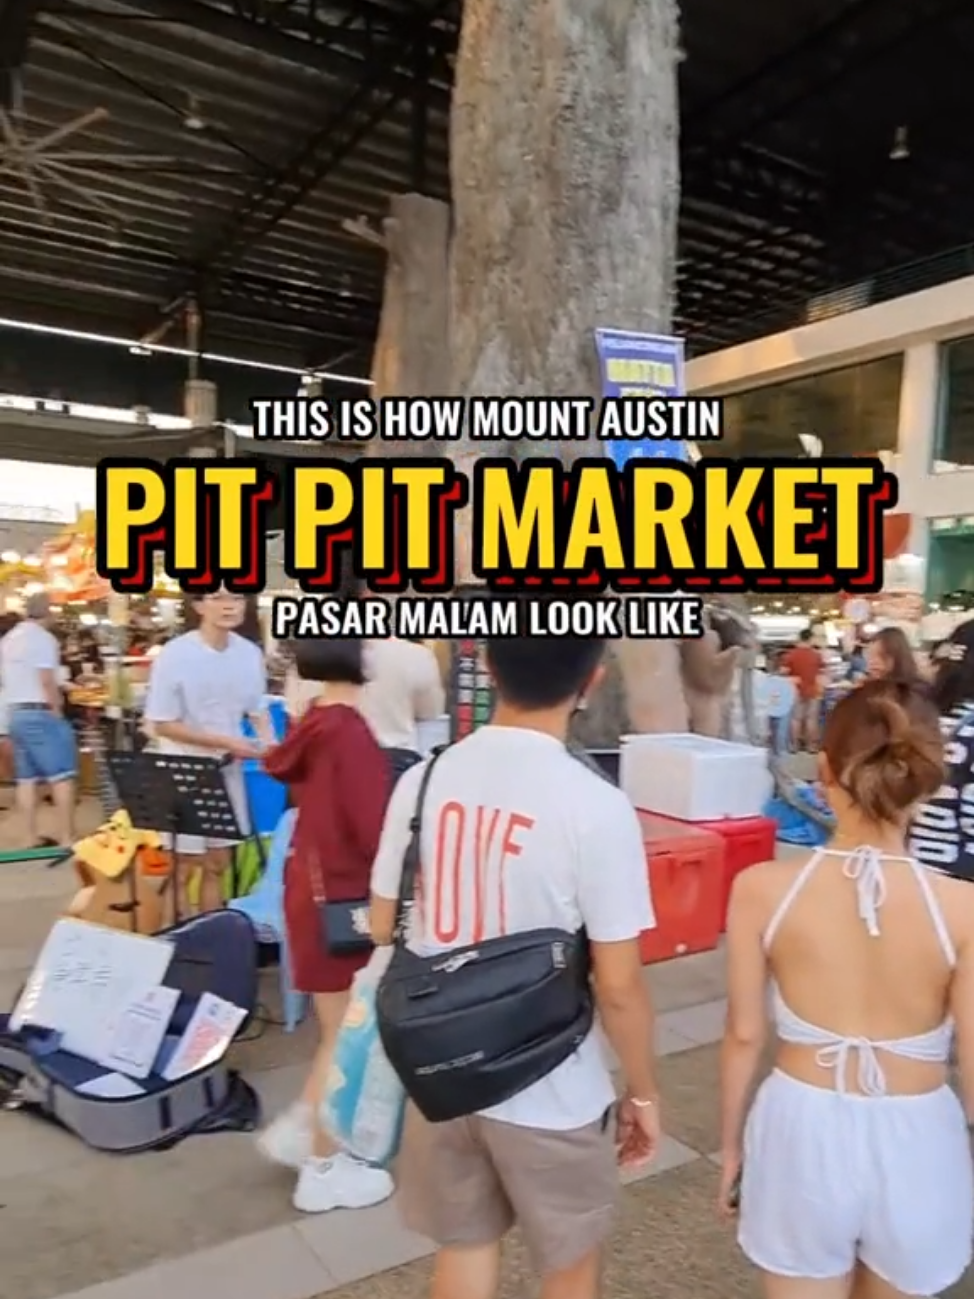 PIT PIT Market at Mount Austin night market 's images